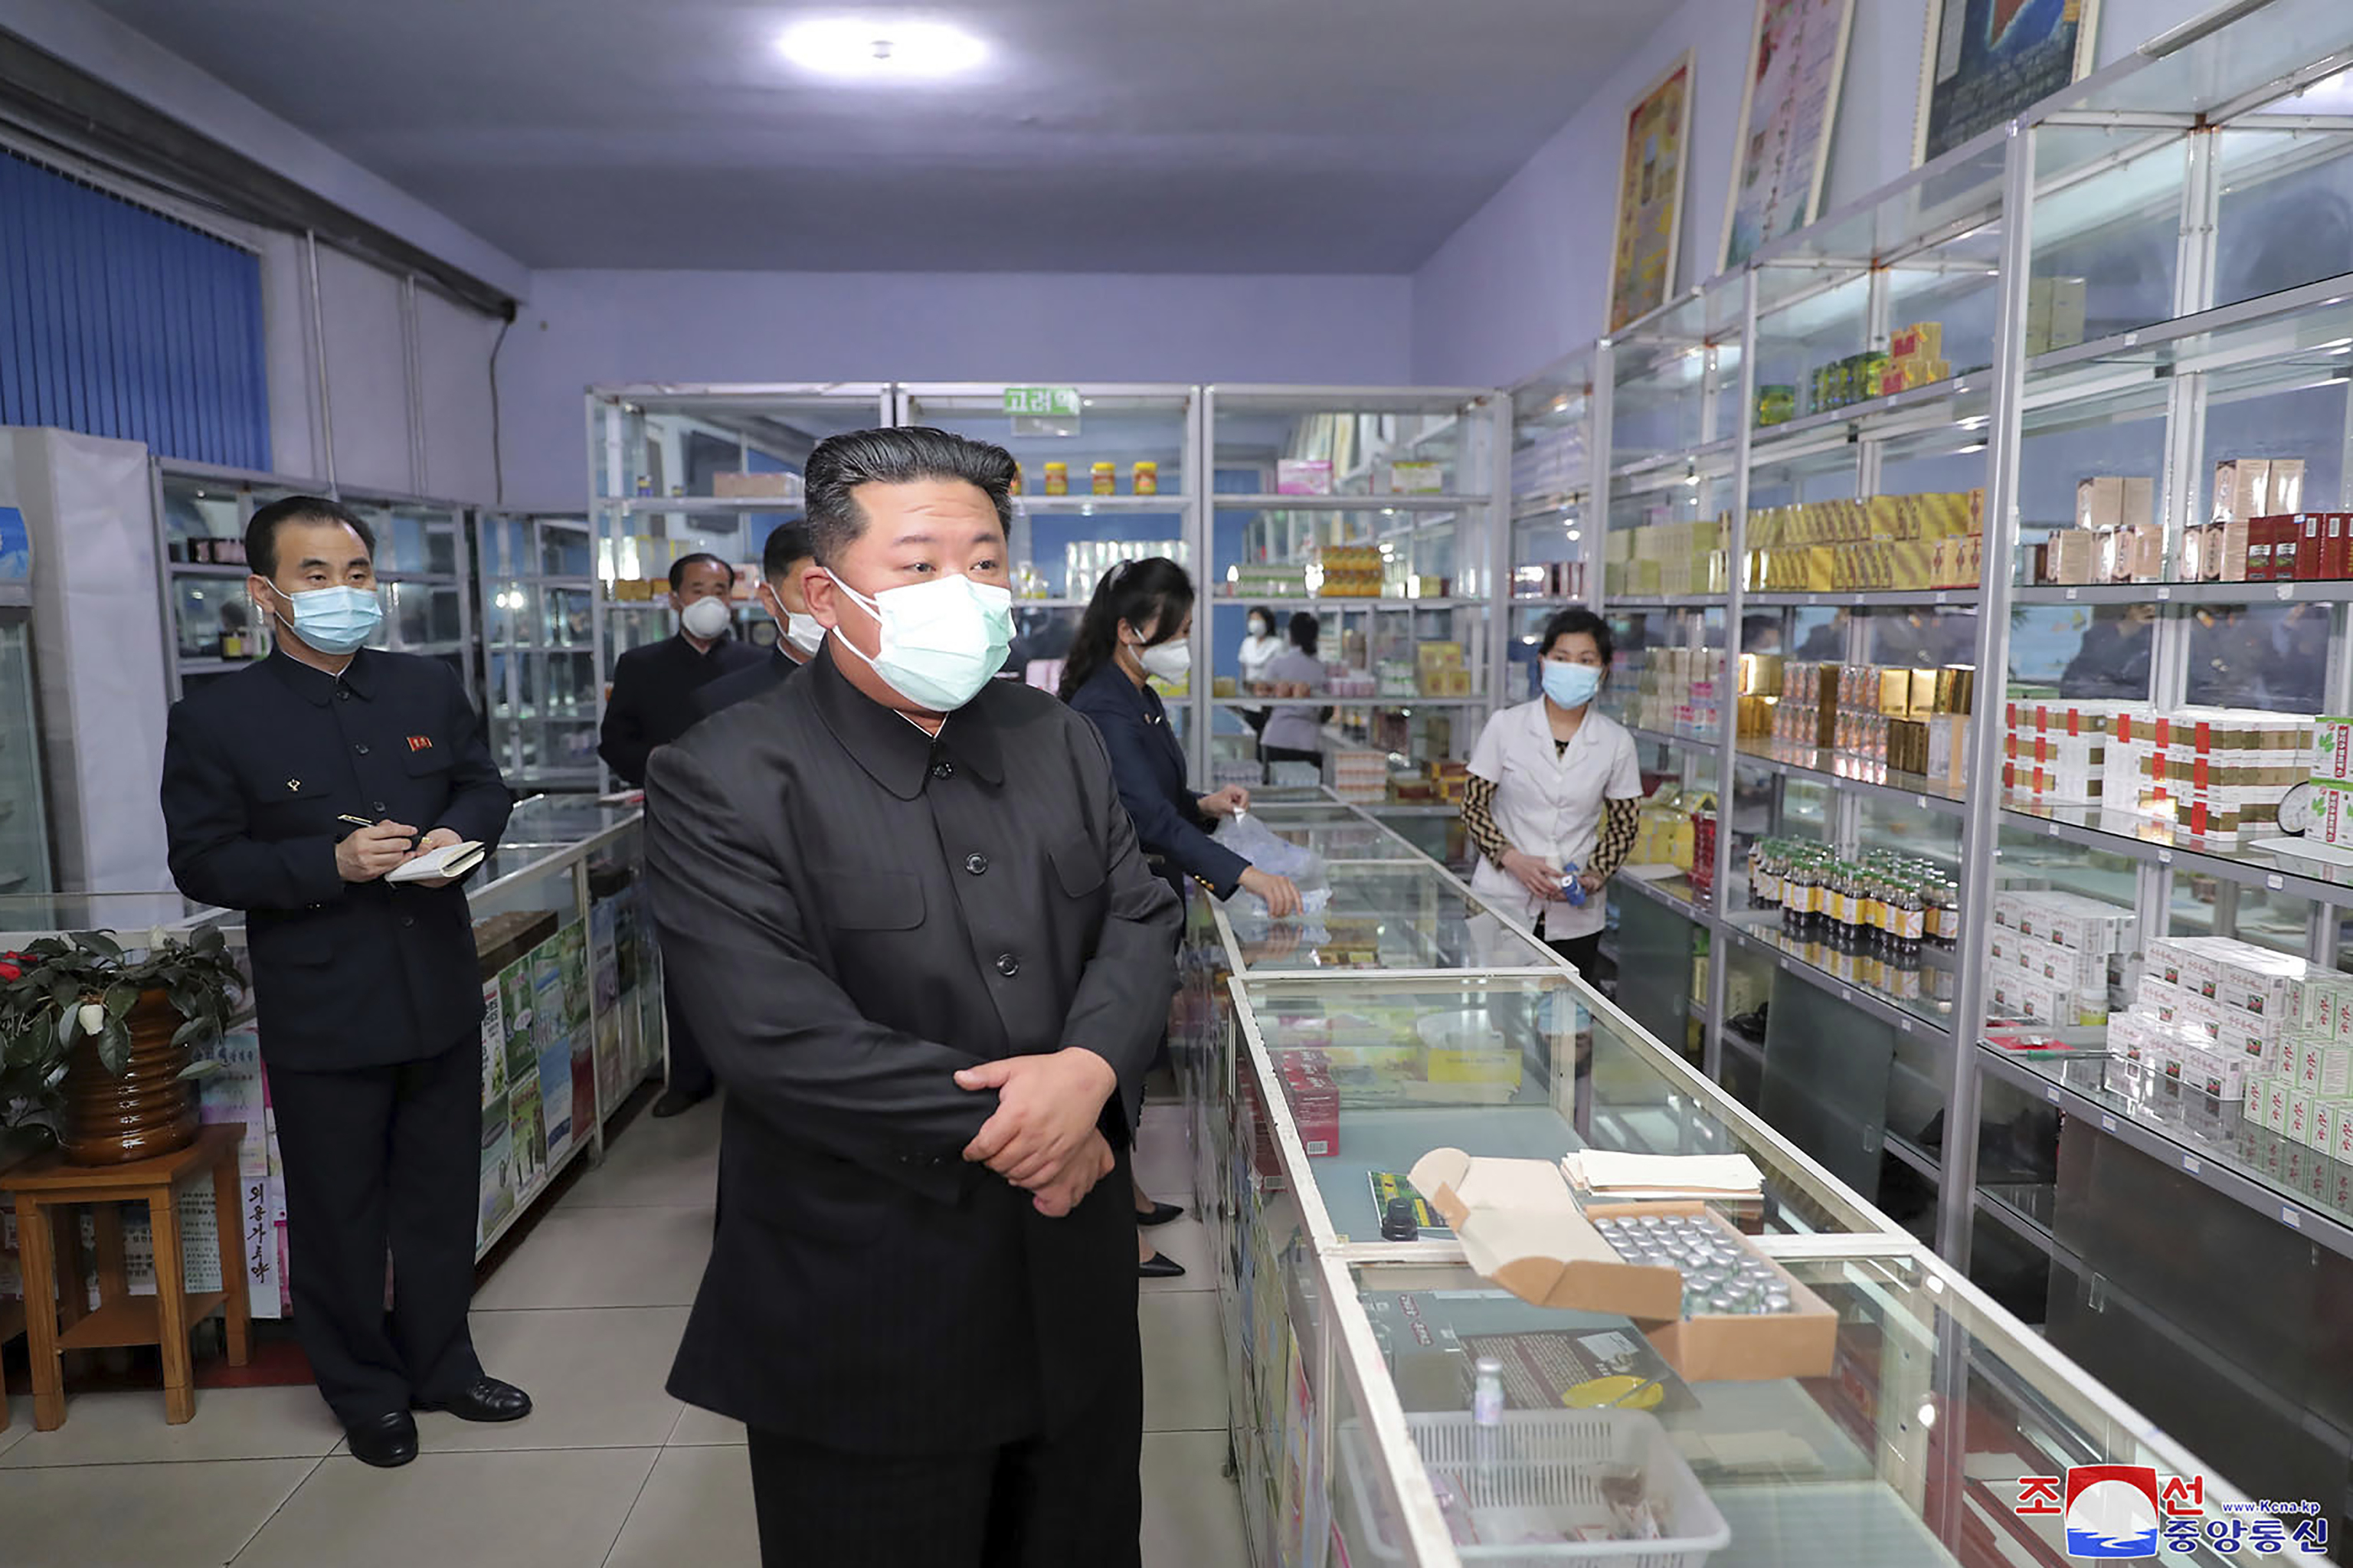 Kim Jong-un wearing a mask at a pharmacy in Pyongyang.